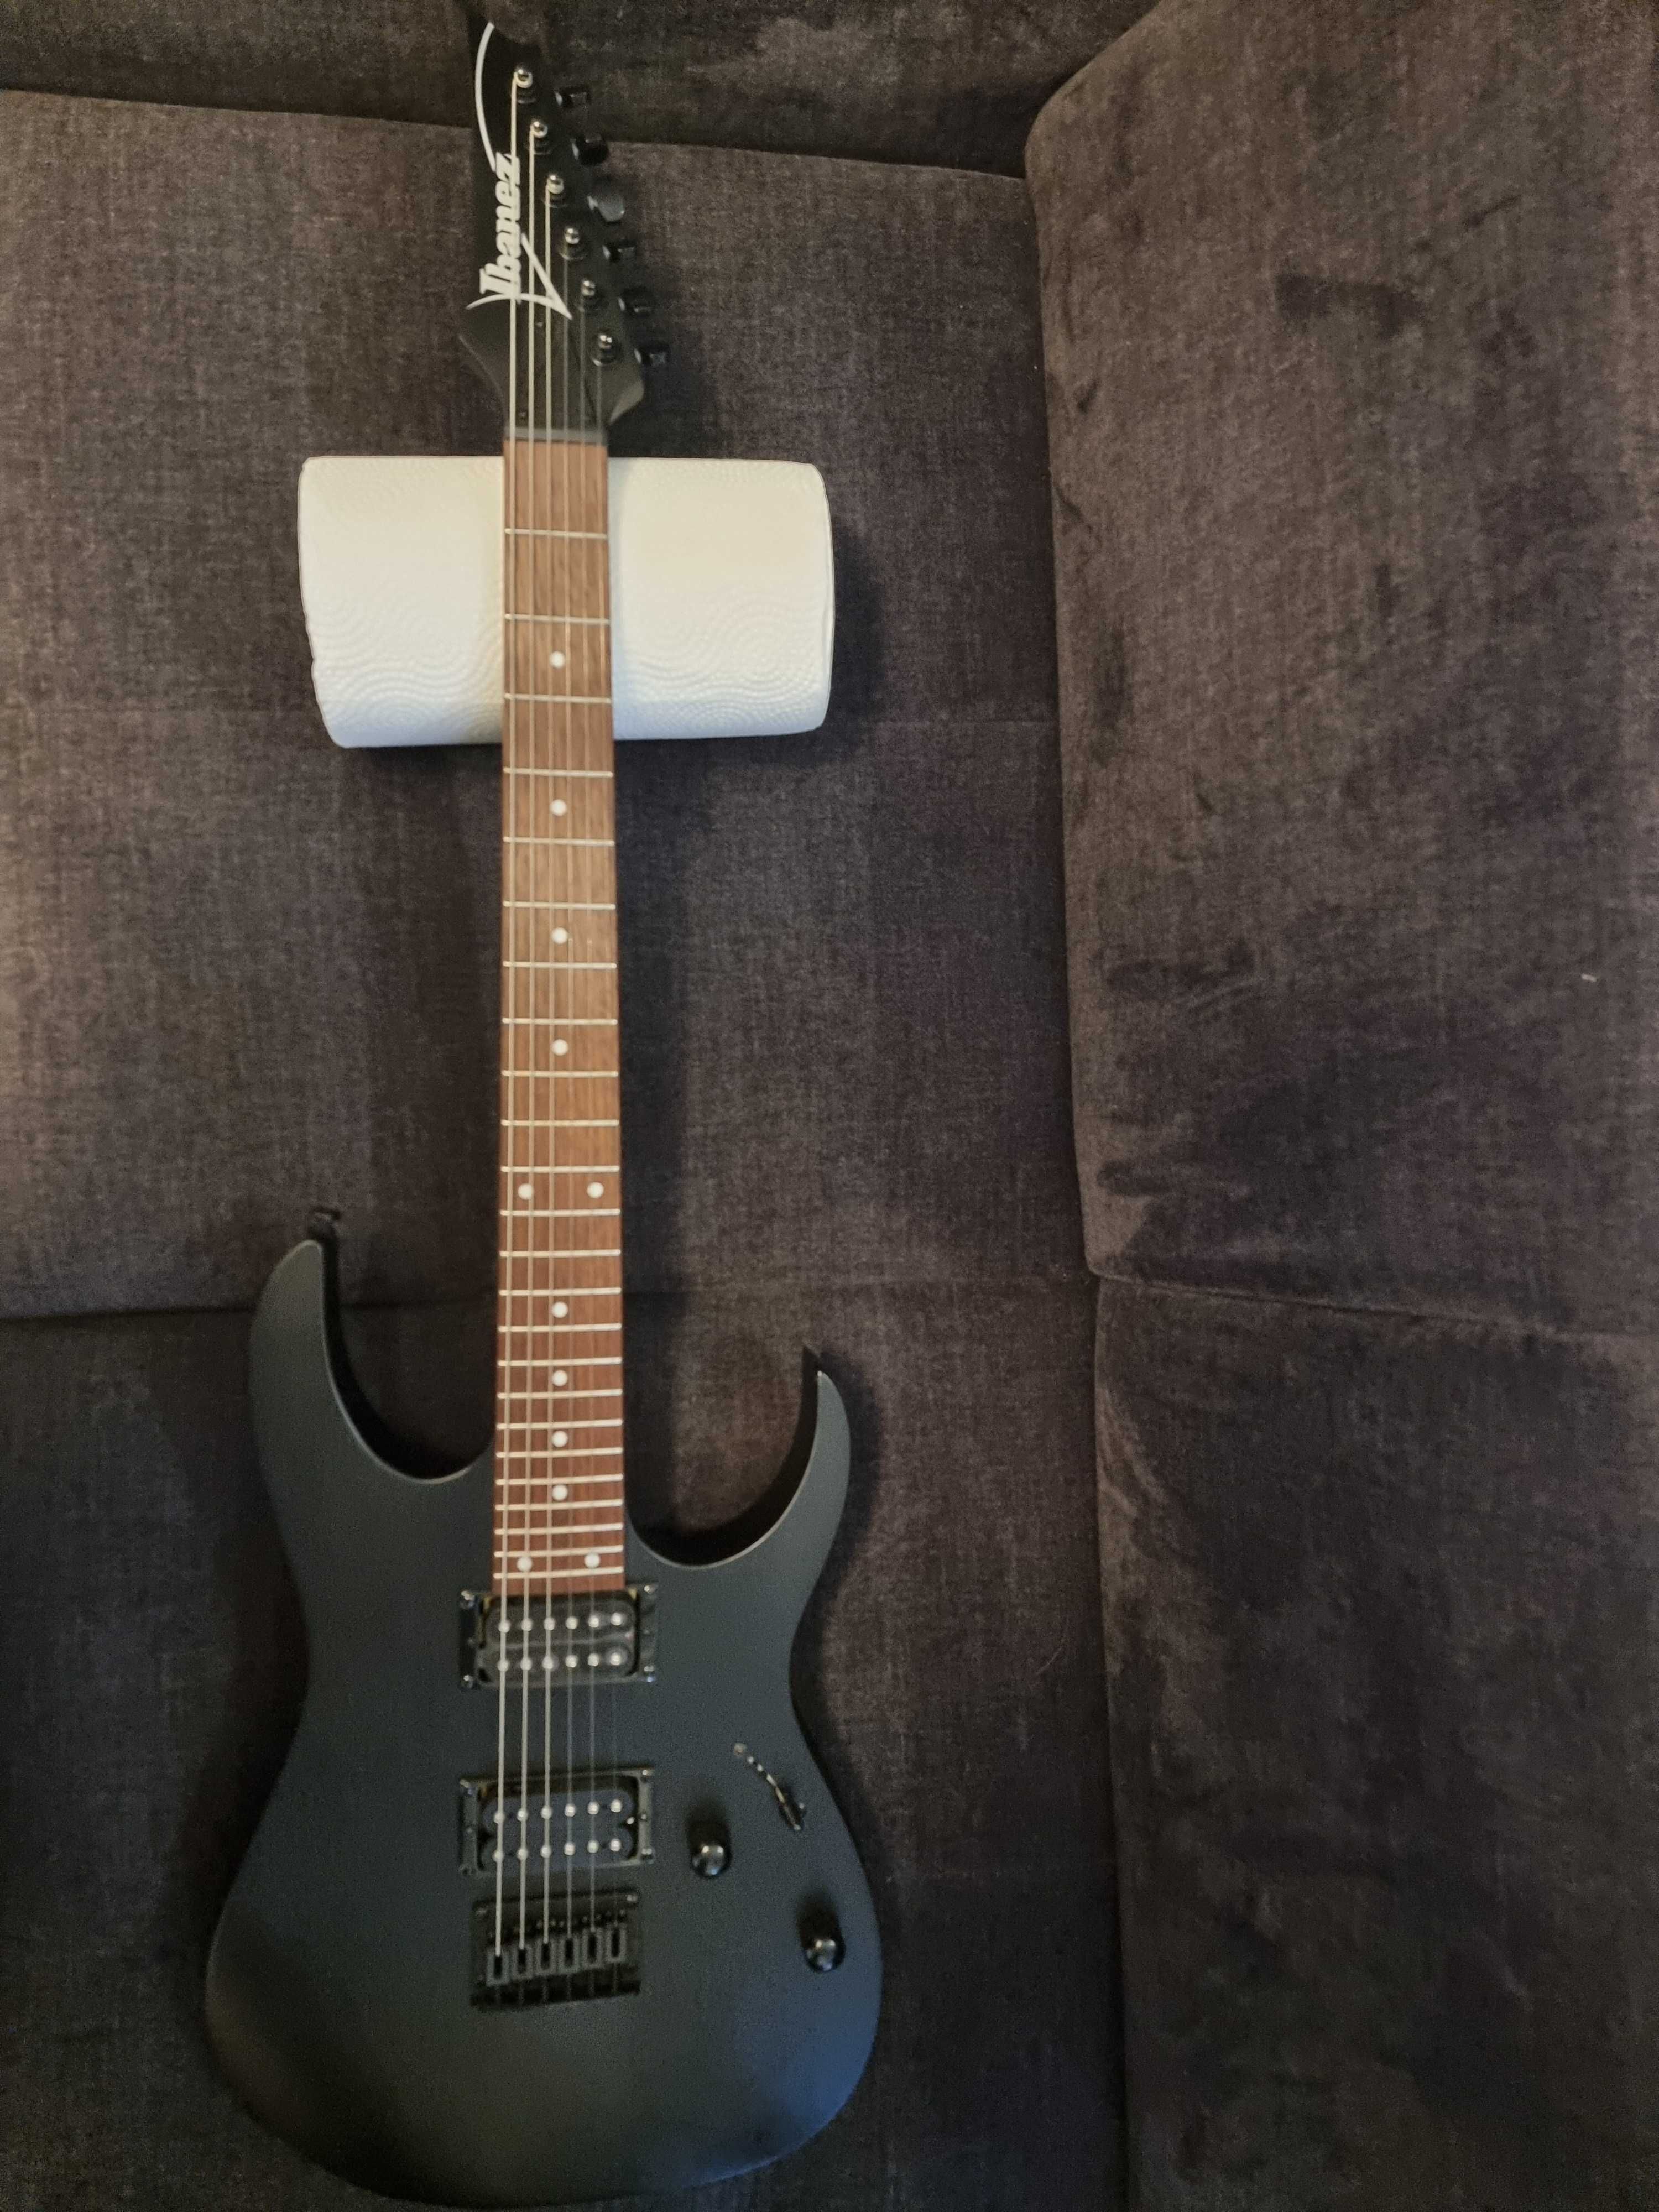 Gitara Ibanez RGRT421 WK + Piec Fender Mustang LT25  + Akcesoria